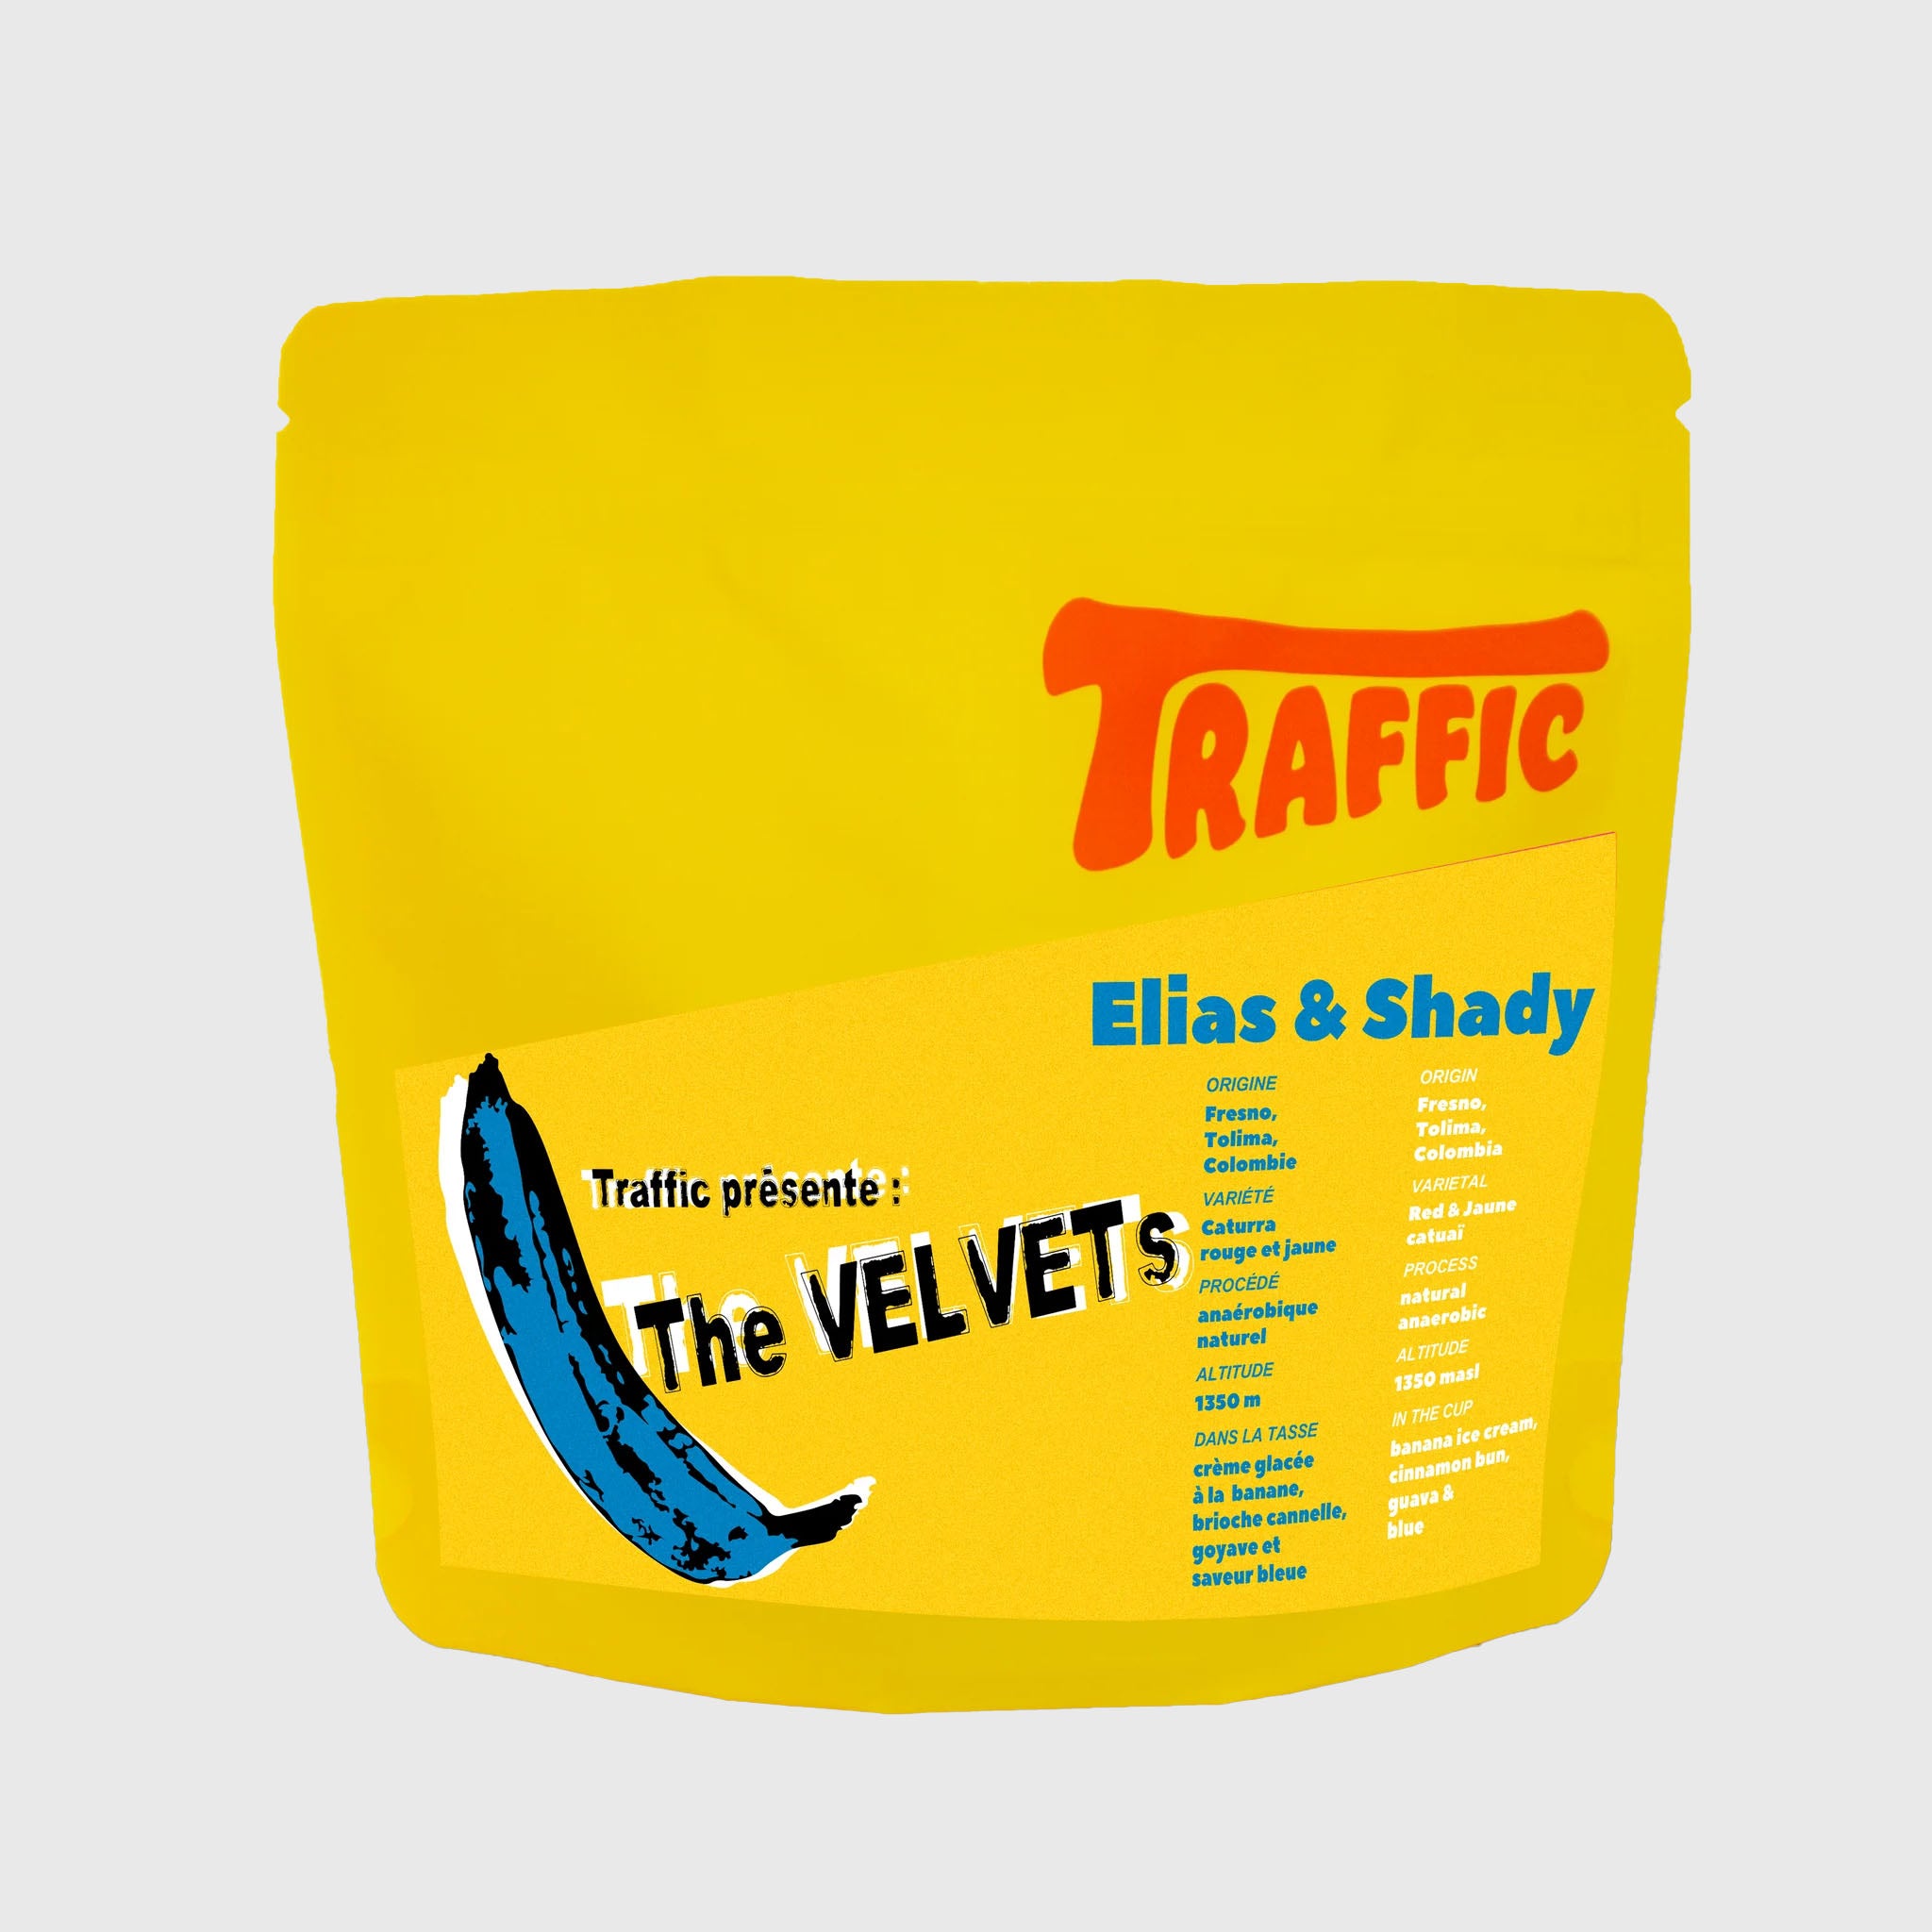 Elias & Shady "The Velvets" (Les Velours)